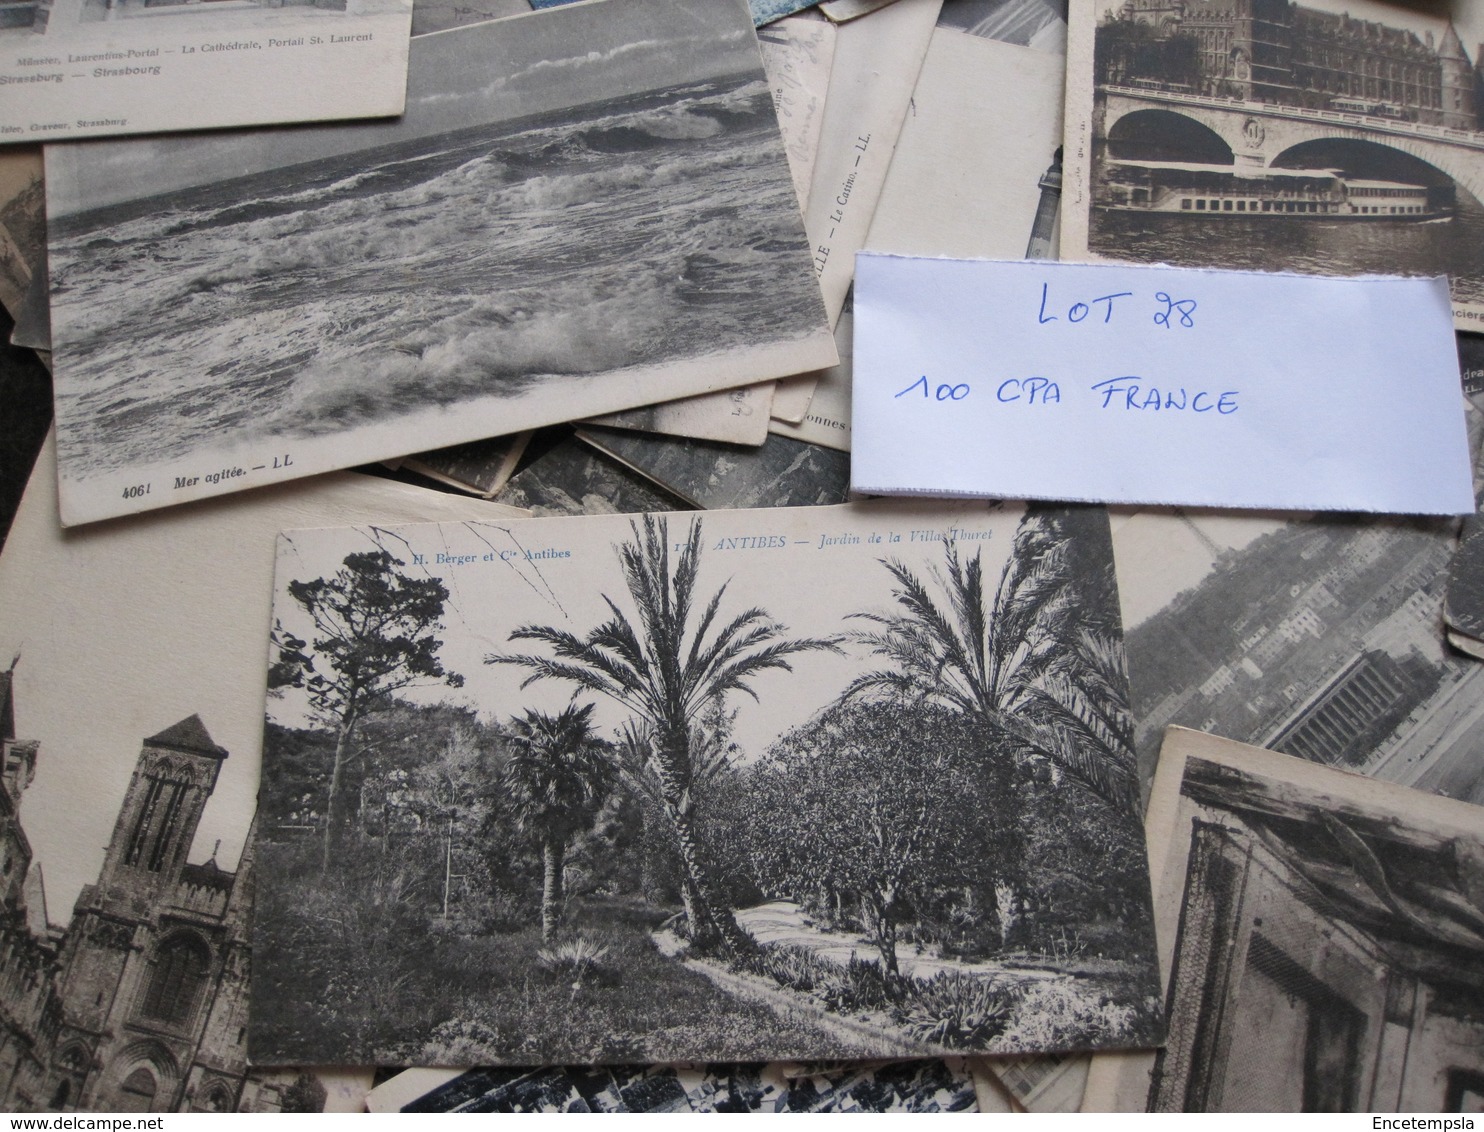 CPA - Carte postale - Lot de 100 cartes postales de France - ( Lot 28 )